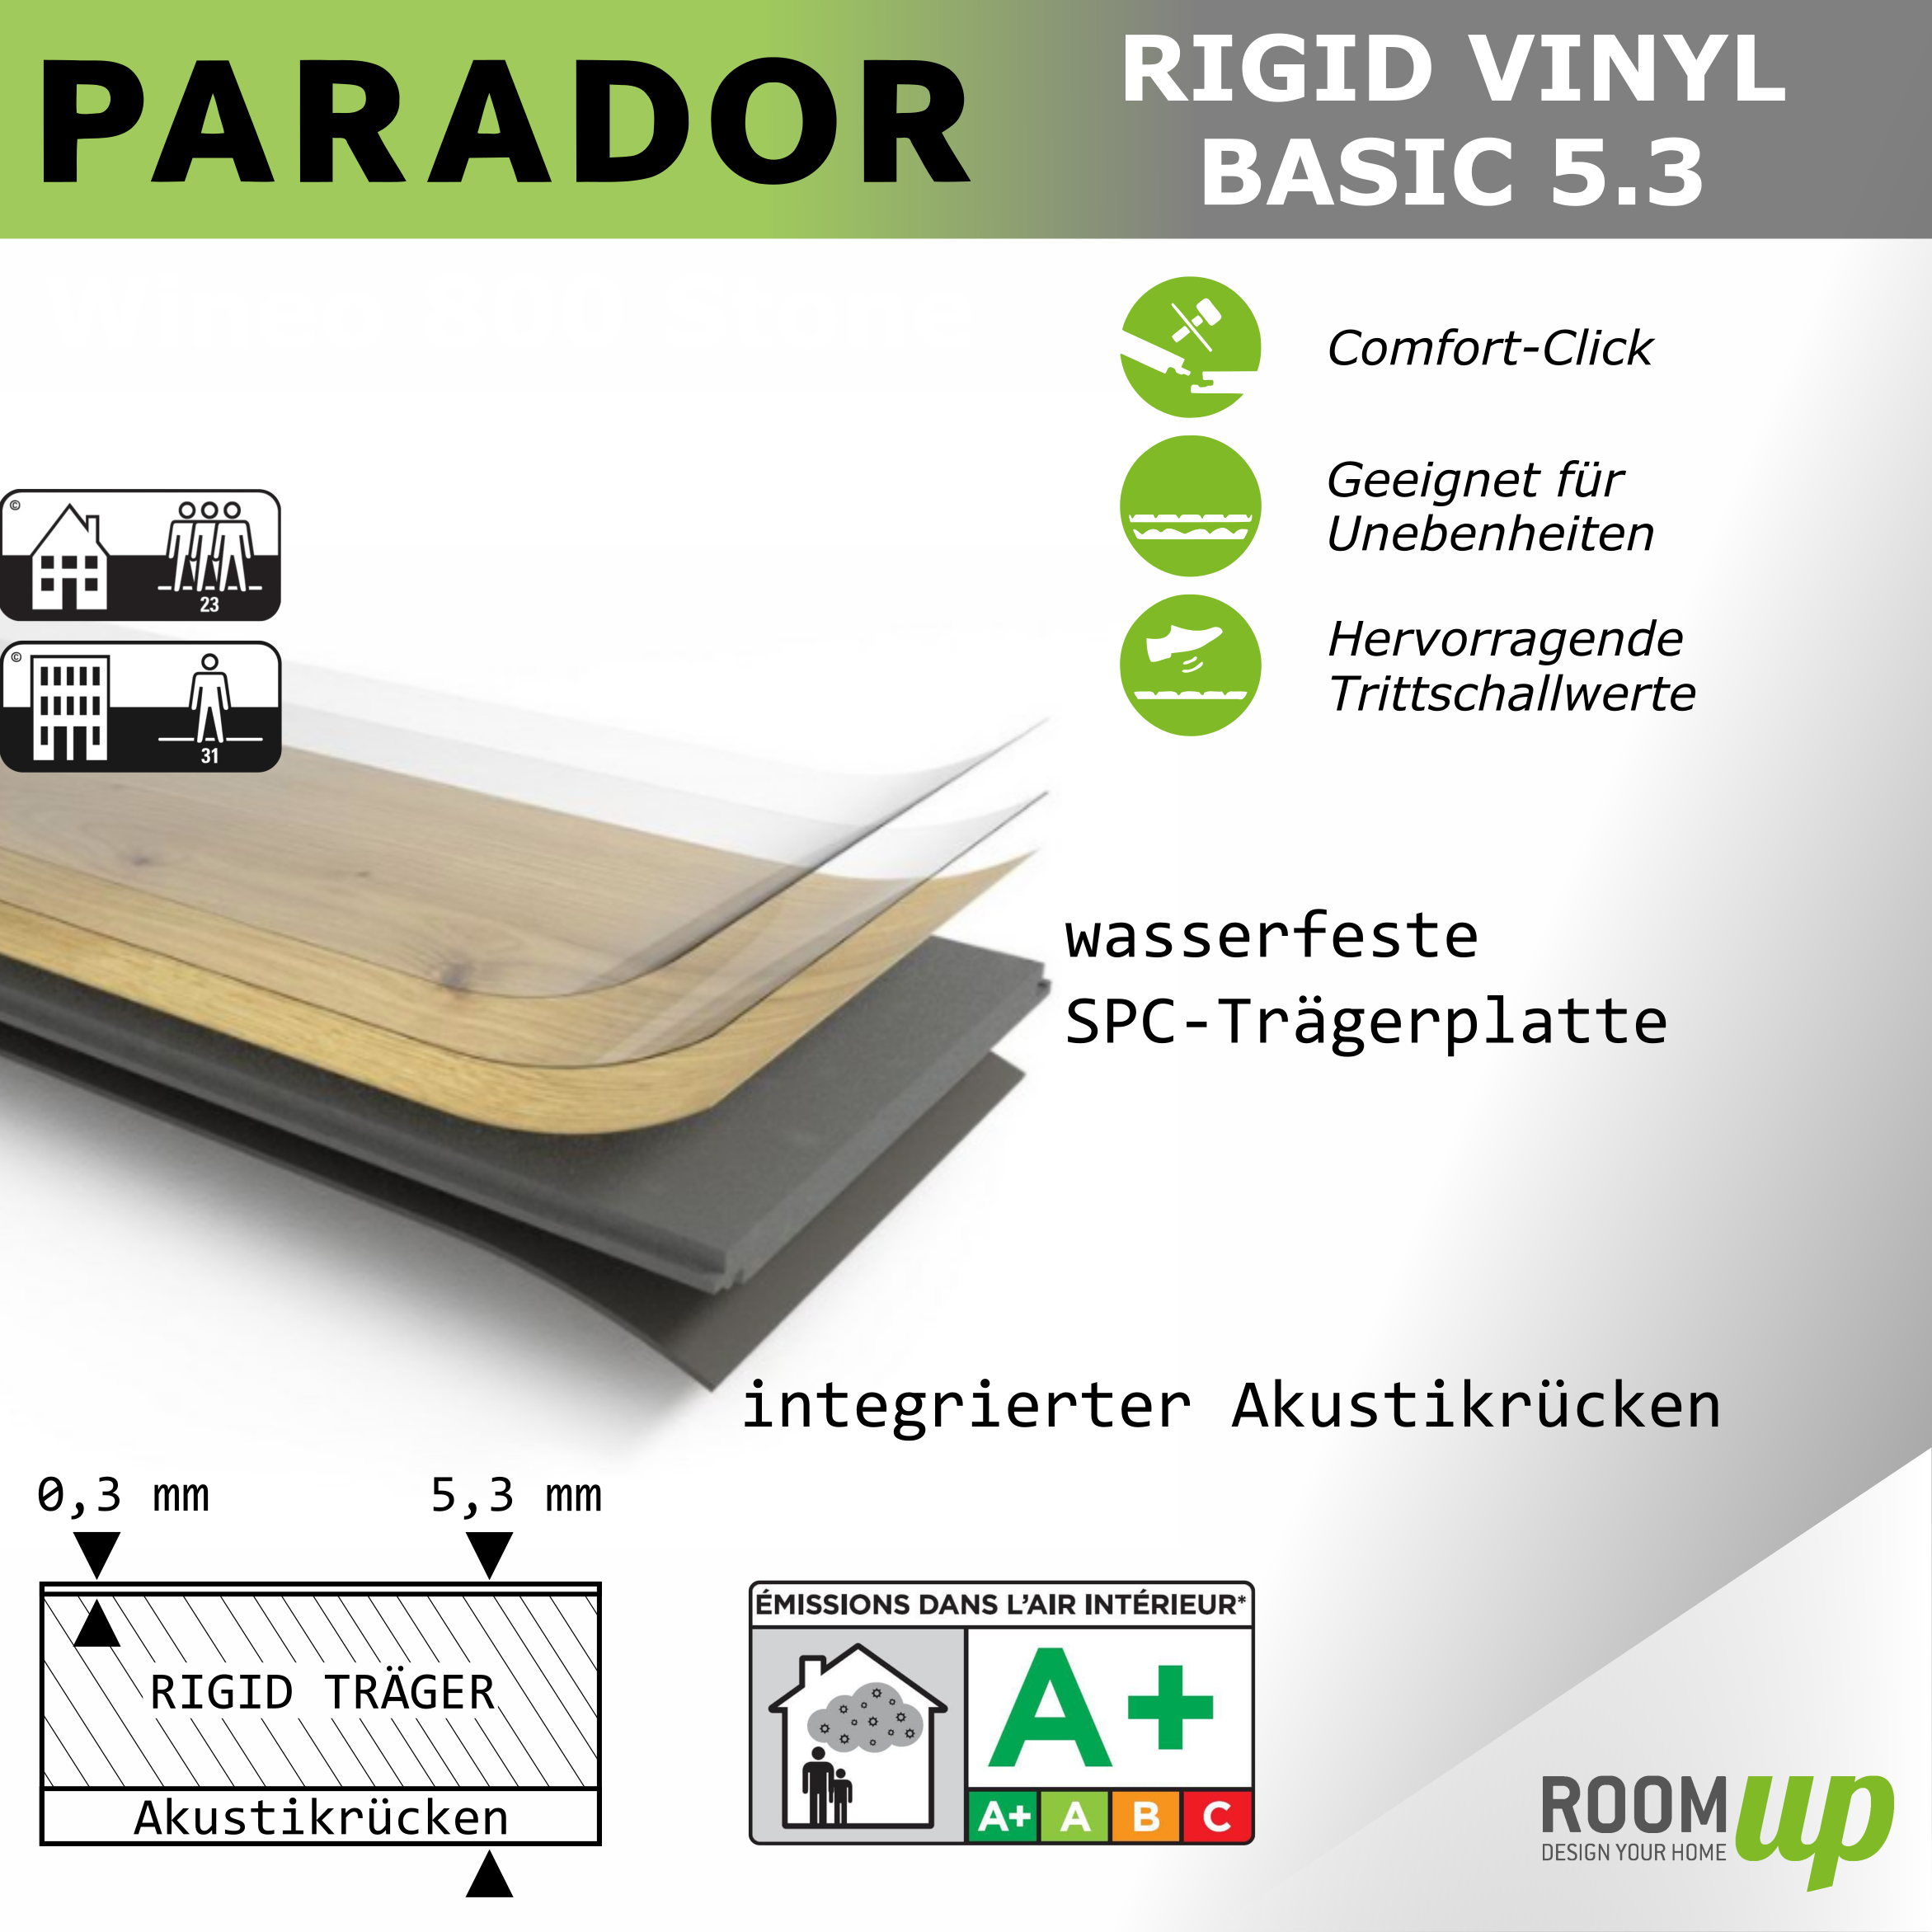 Parador Basic 5.3 Rigid Vinyl Aufbau